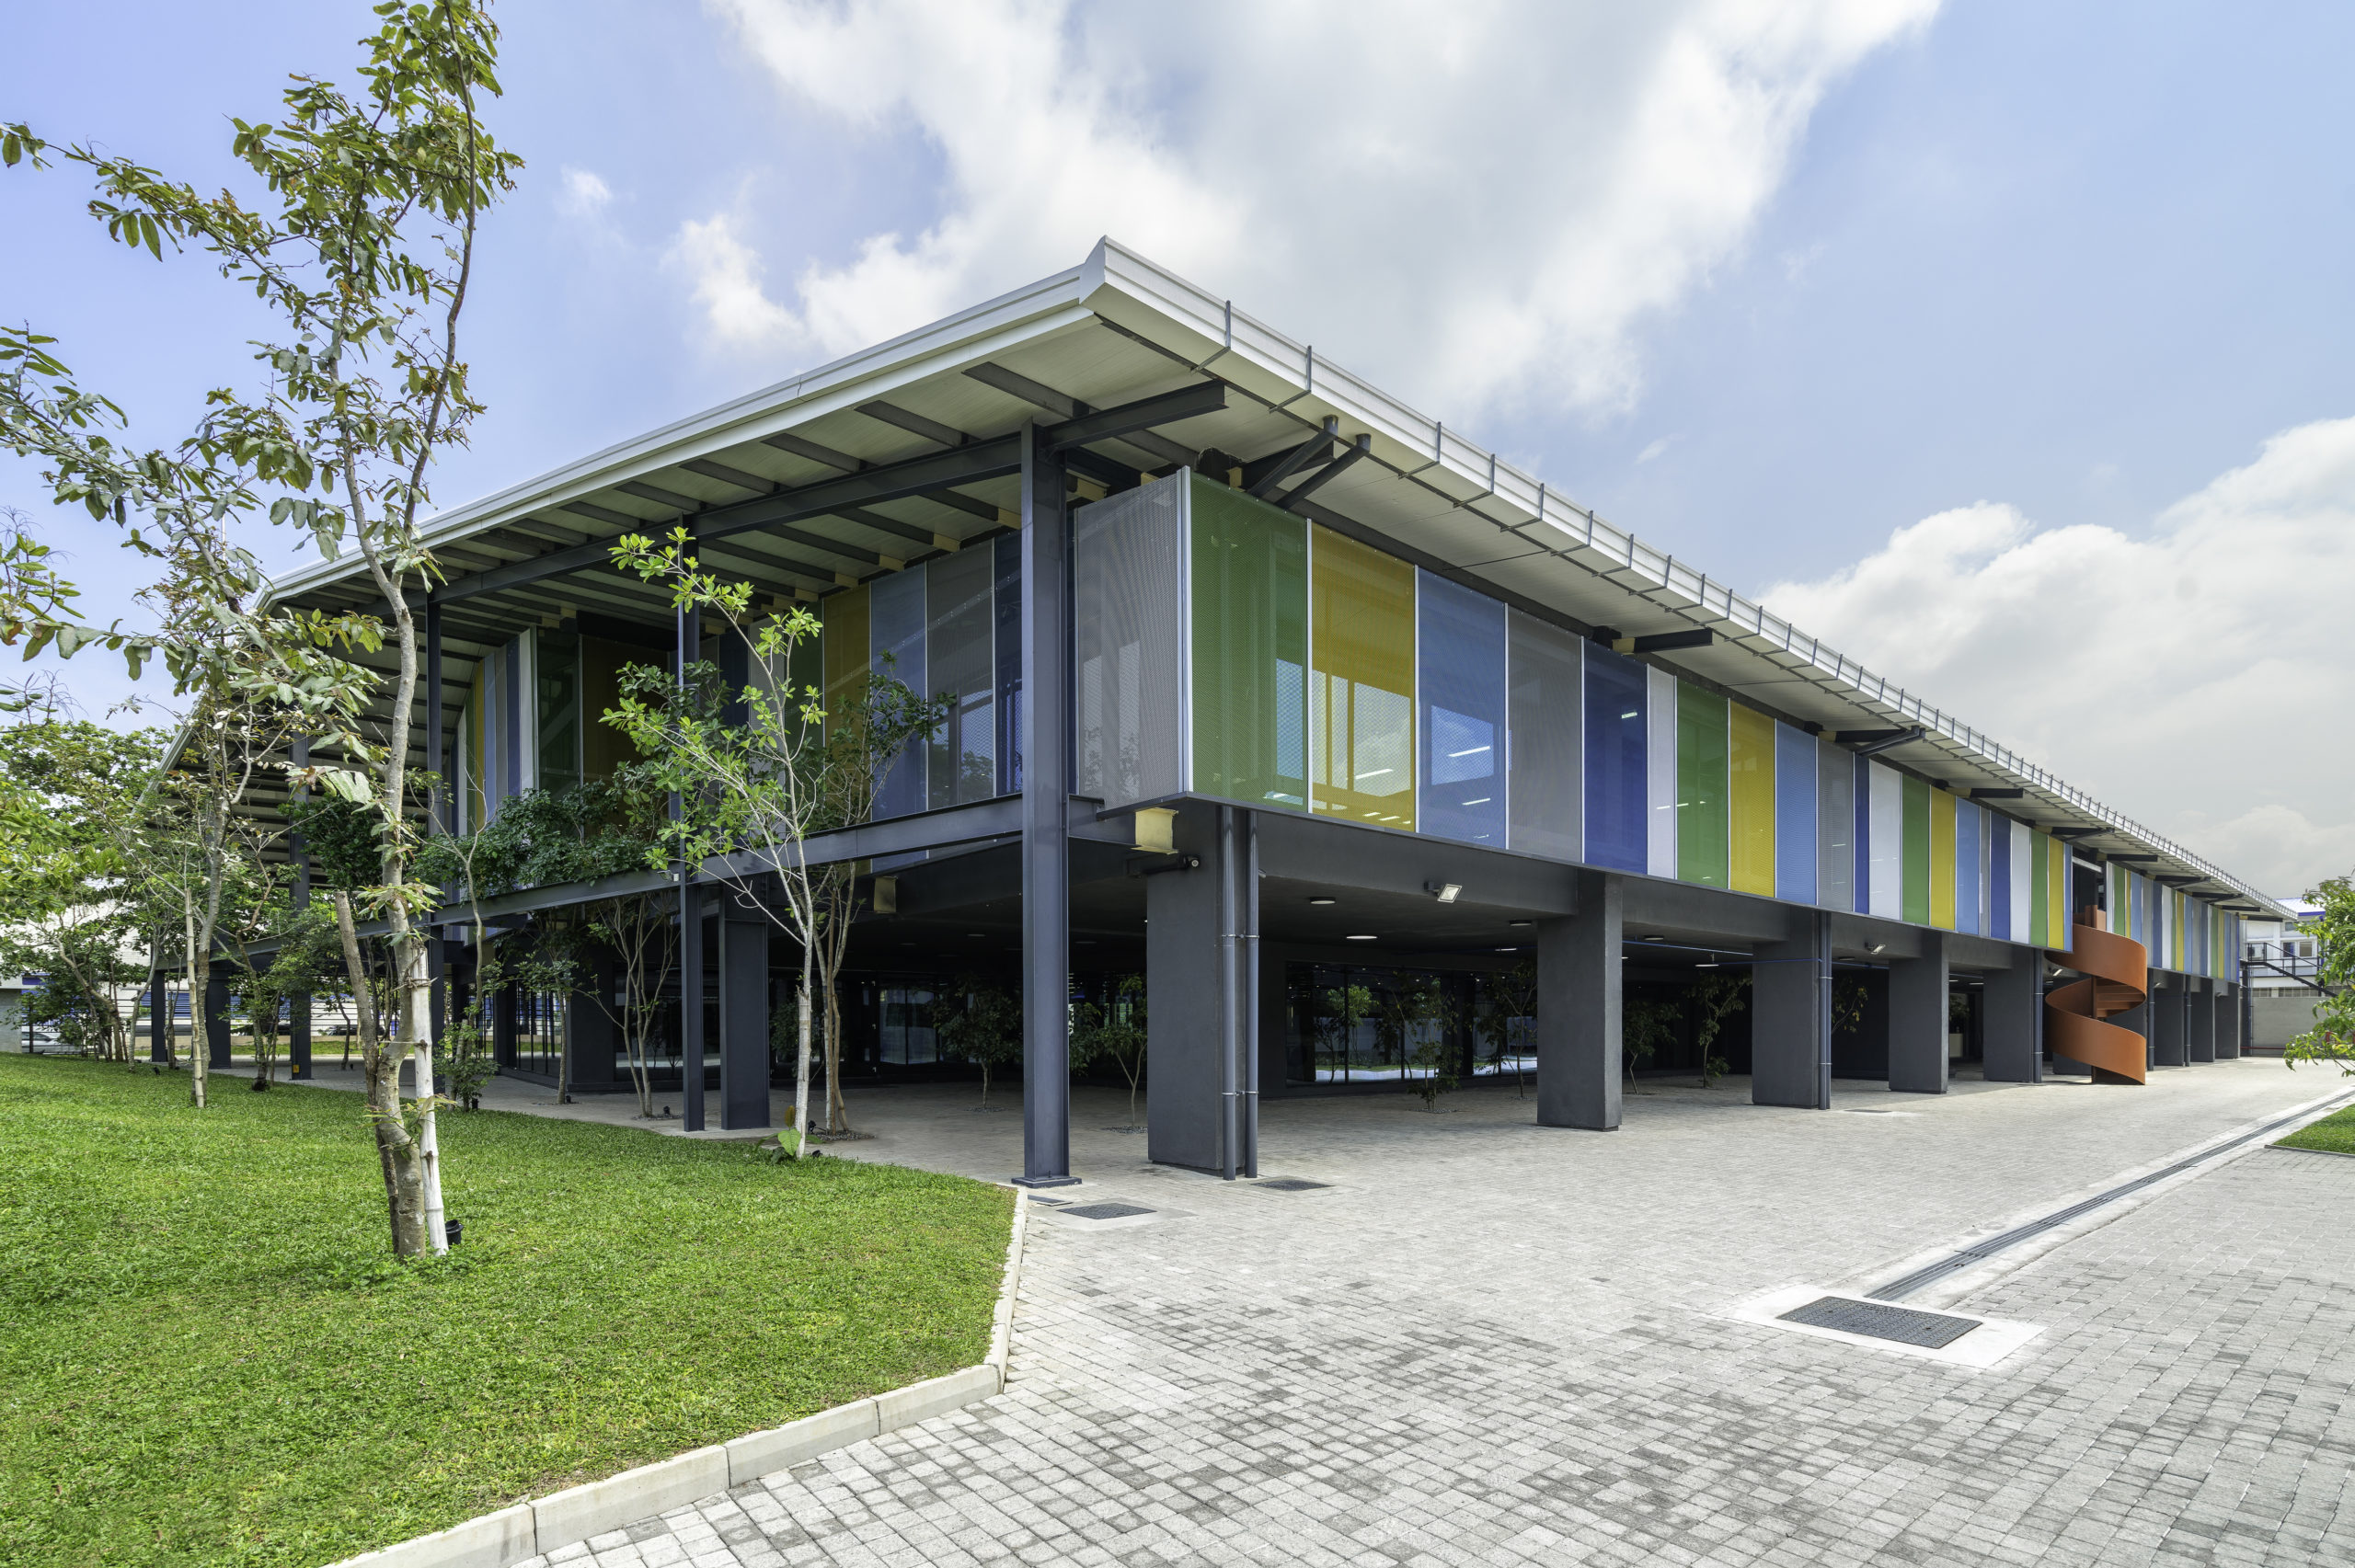 Sustainability Merit Award: Star Innovation Center: Sri Lanka Passive House Industrial Building by Jordan Parnass Digital Architecture and Vinod Jayasinghe Associates, in Colombo, Sri Lanka. Photo: Ganidu Balasuriya.